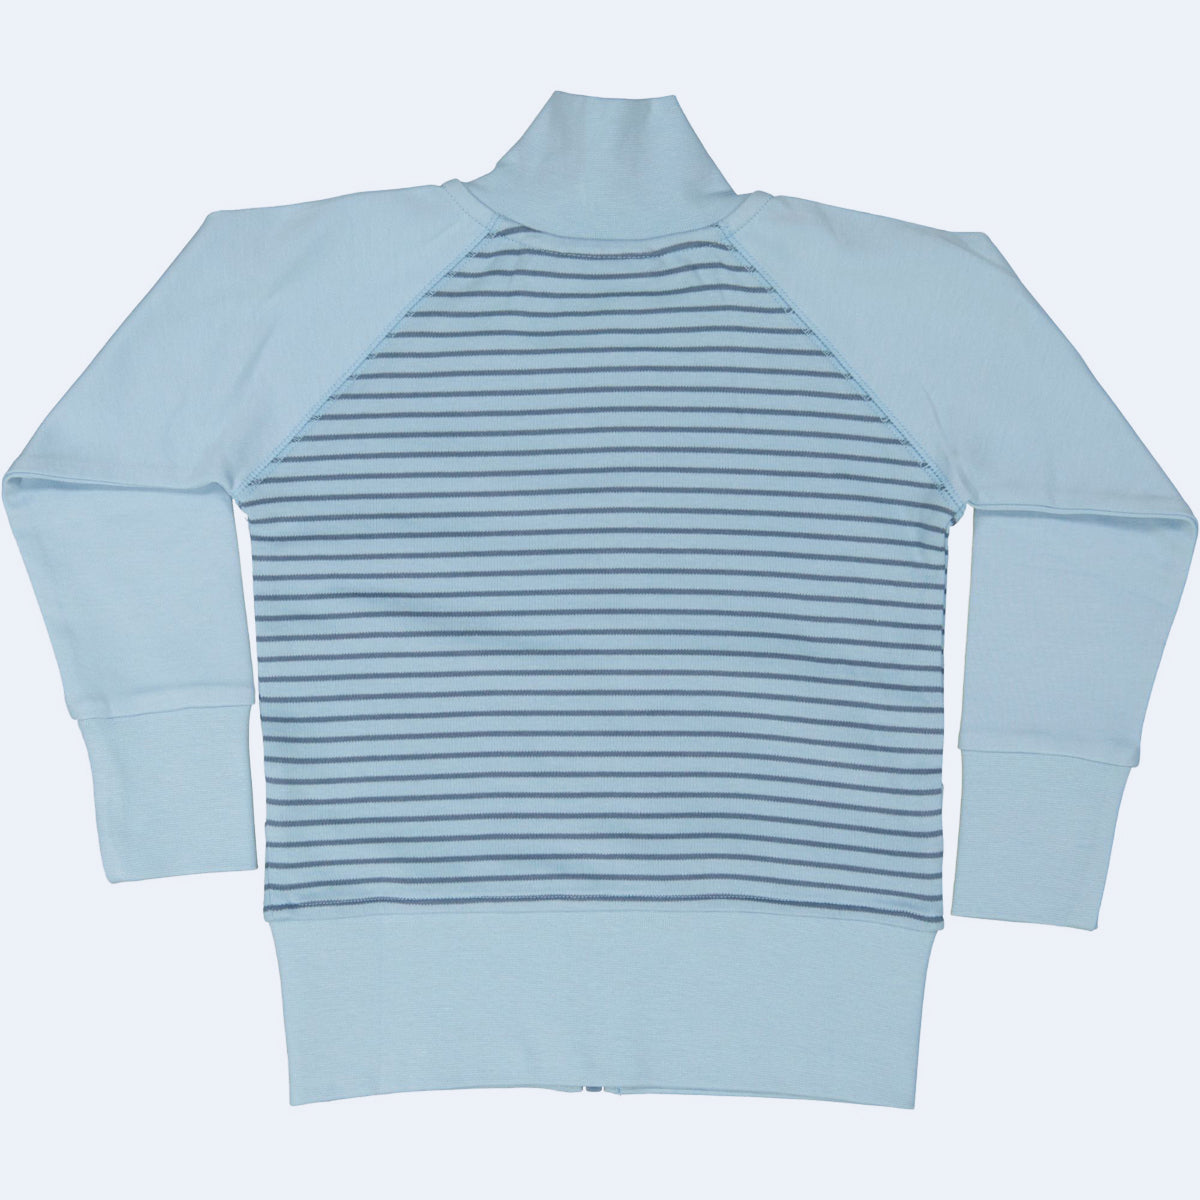 Geggamoja®  "Zipsweater" in Organic Cotton - LIGHT BLUE STRIPE, sizes up to 8 yr.